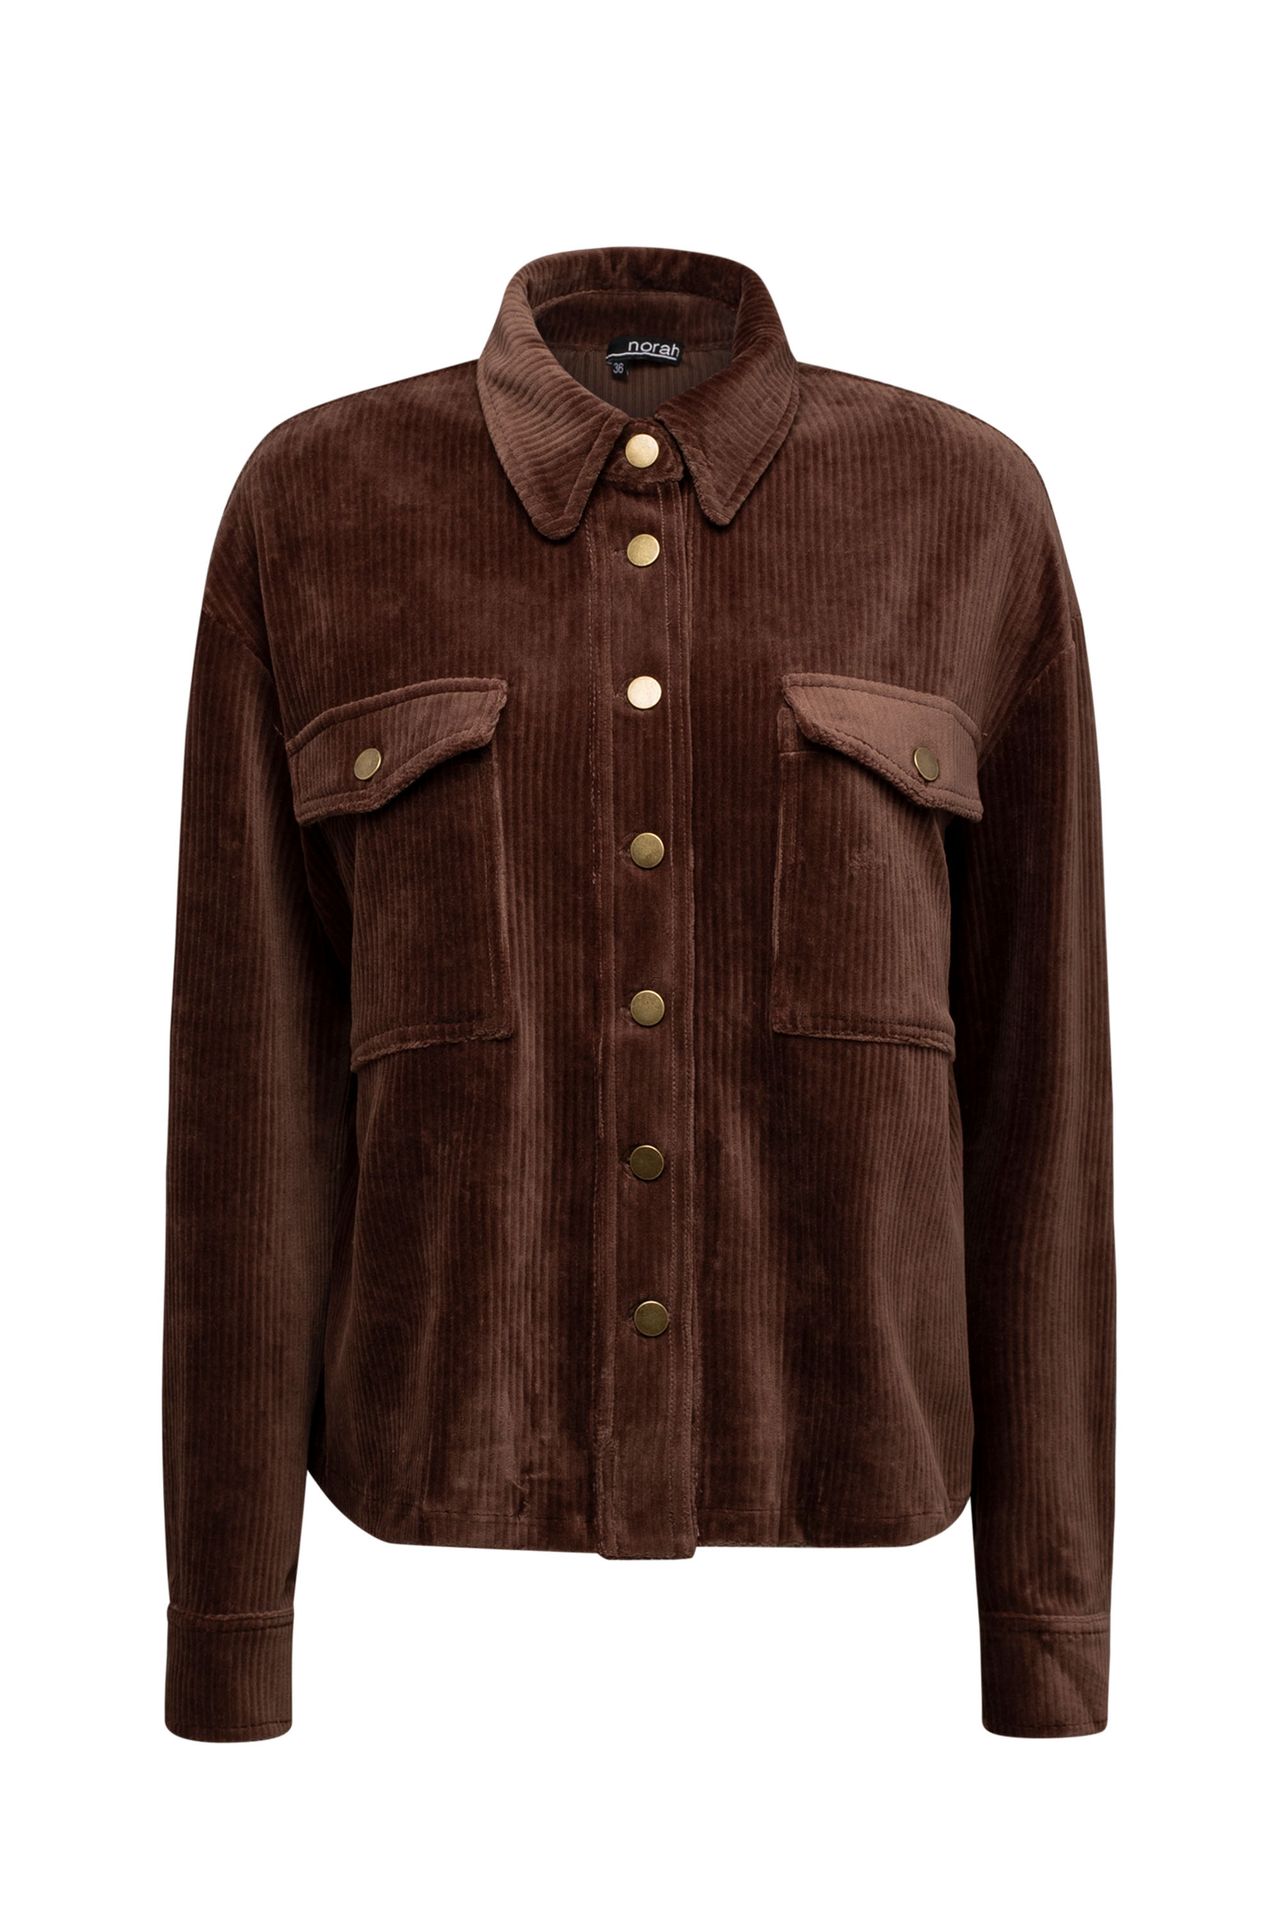 Norah Jacket bruin brown 213300-200